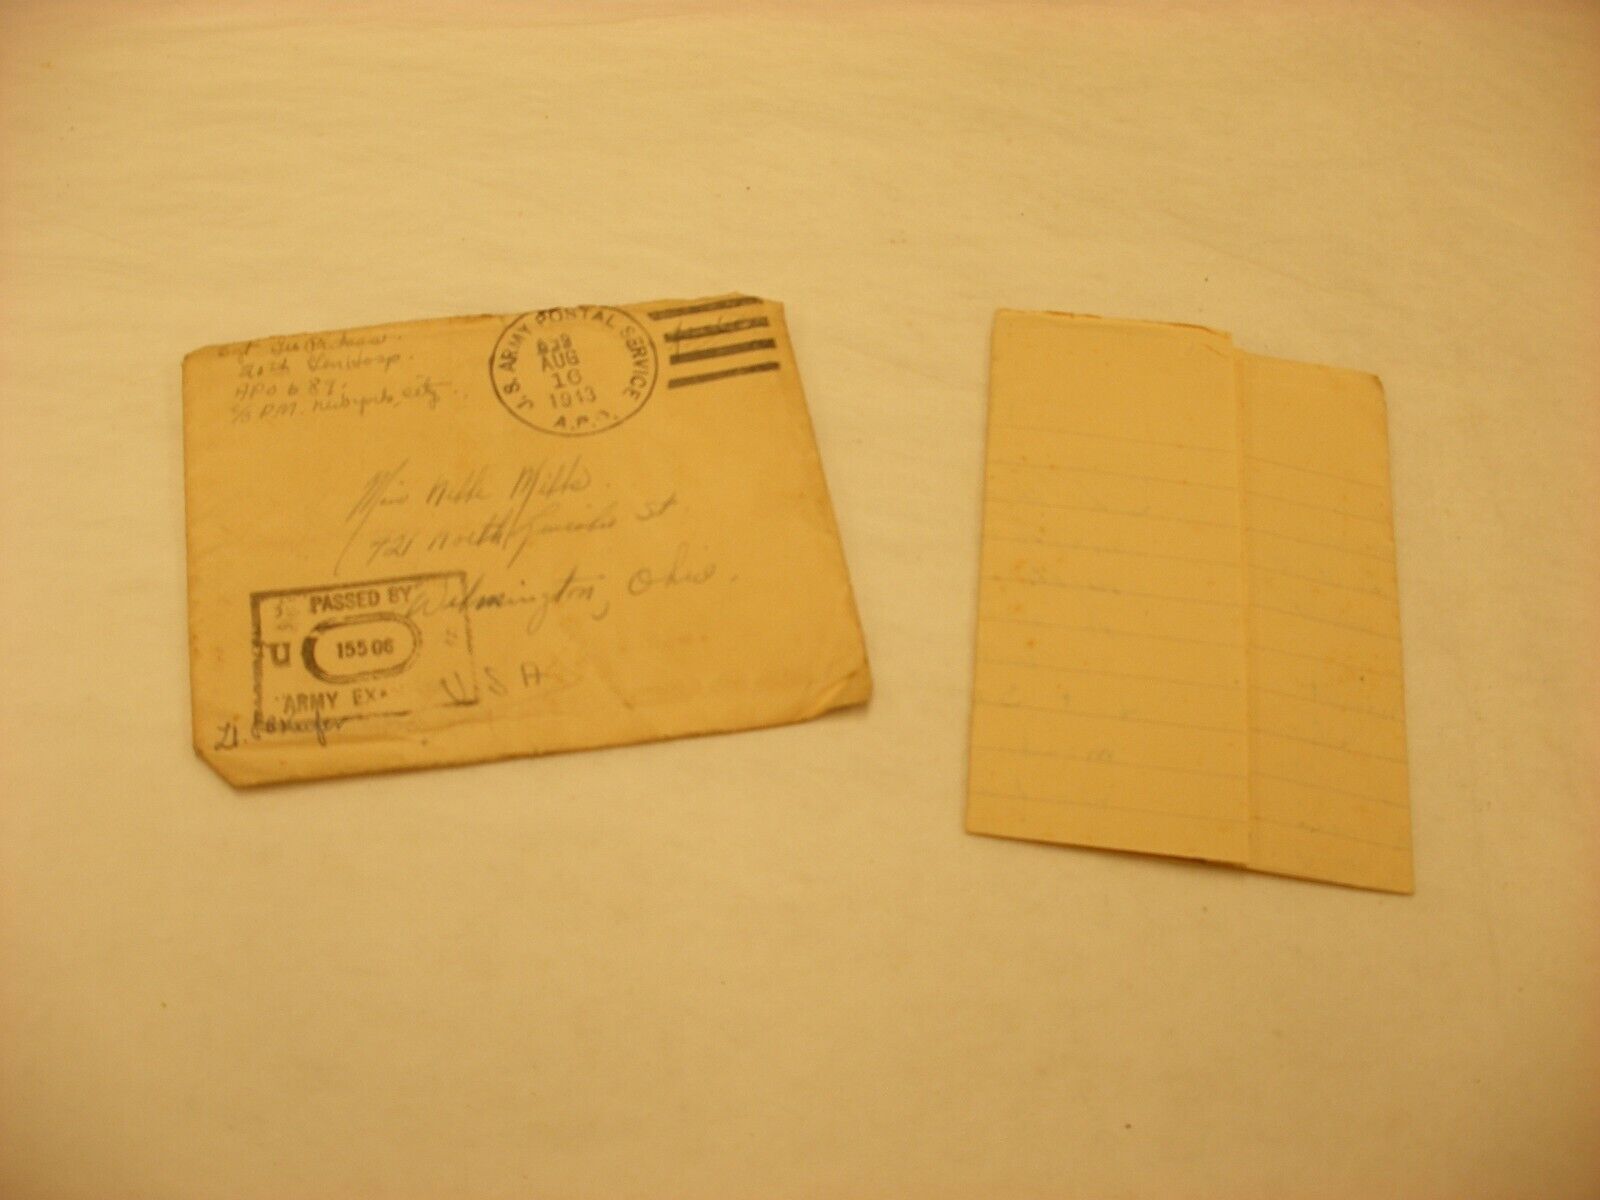 Vtg WW2 1943 Postmark Stamp US Army Postal Service APO PASSED by EXAMINER 15506